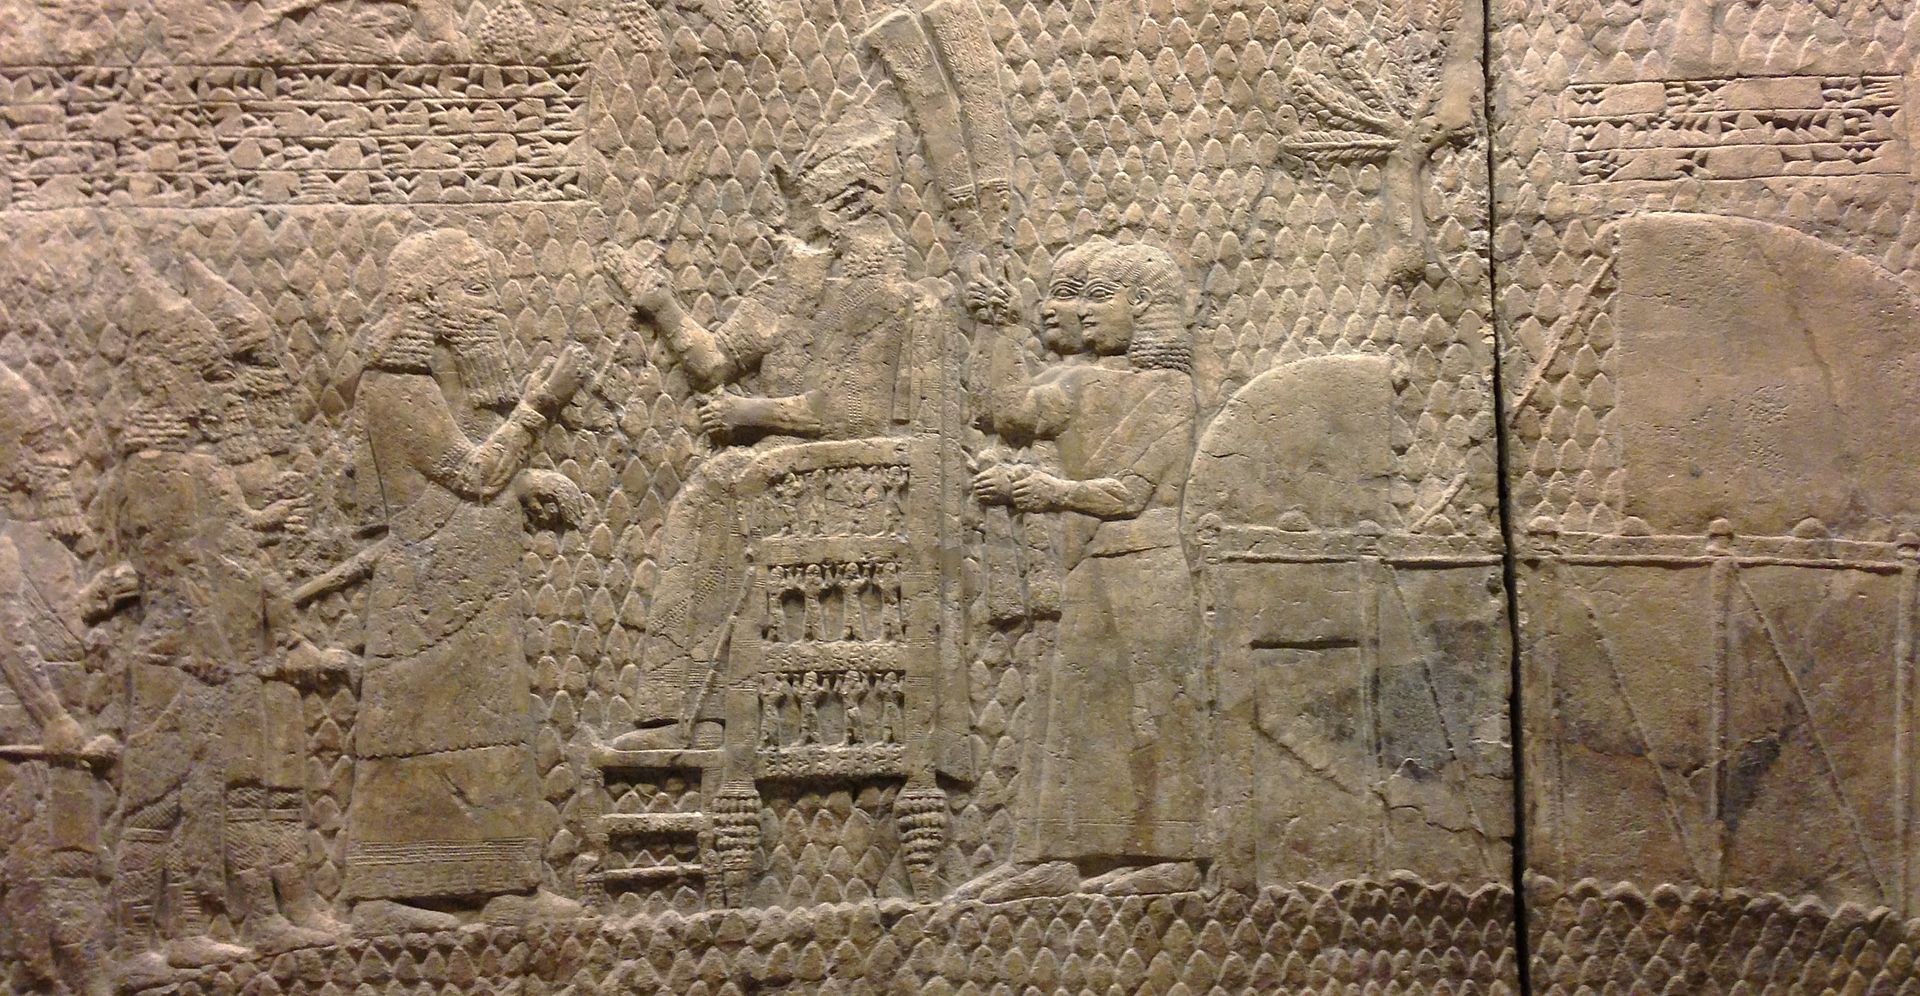 Sennacherib Lachish inscription. Photo © Alaa. License: CC BY-SA 3.0. File ID: commons.wikimedia.org/w/index.php?curid=27455977